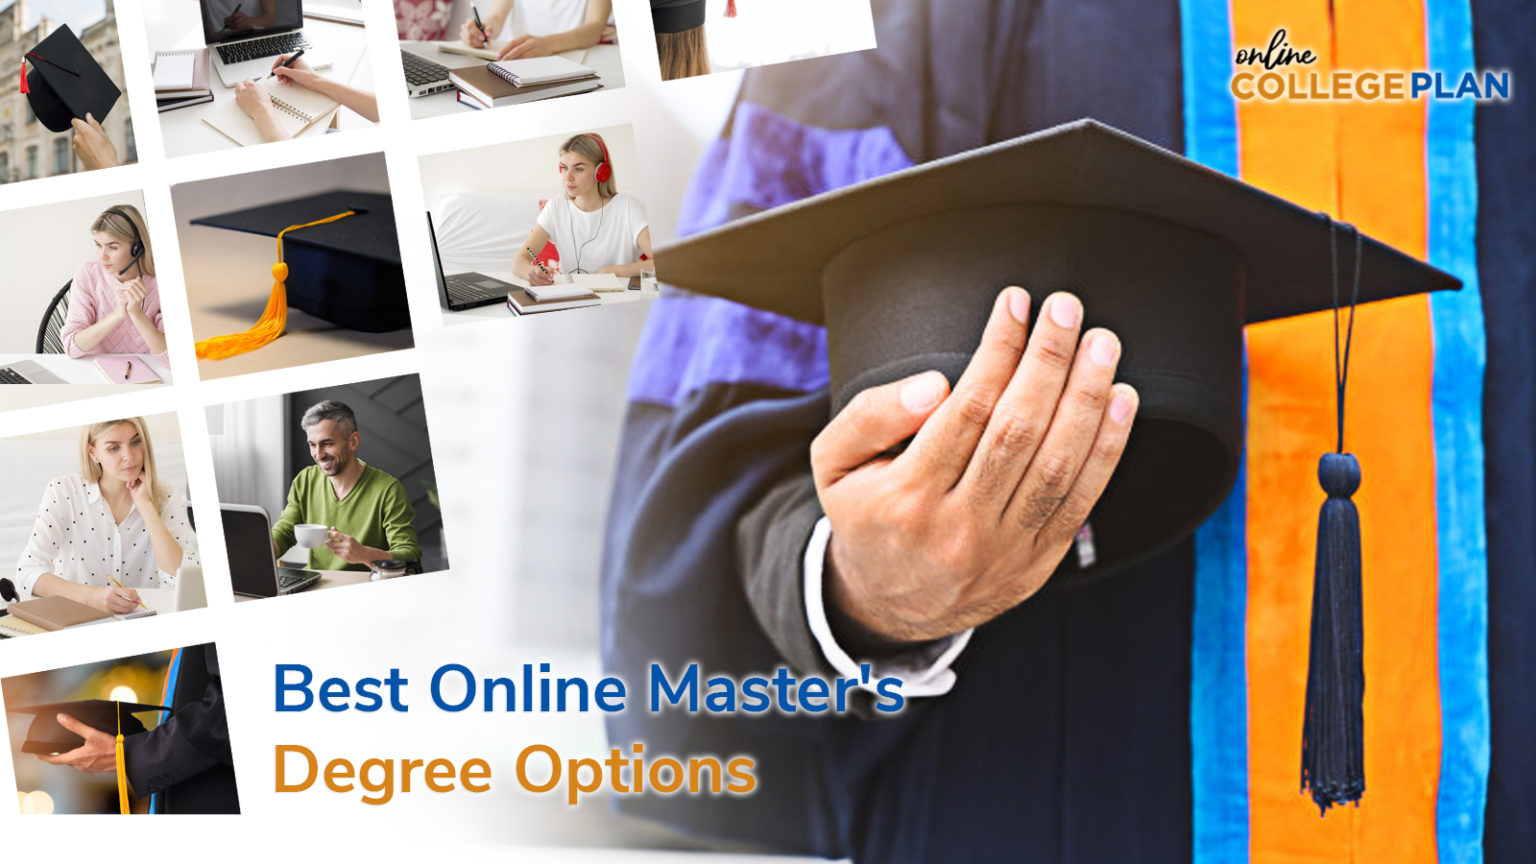 Online College Plan Best Online Masters Degree Options 1536x864 